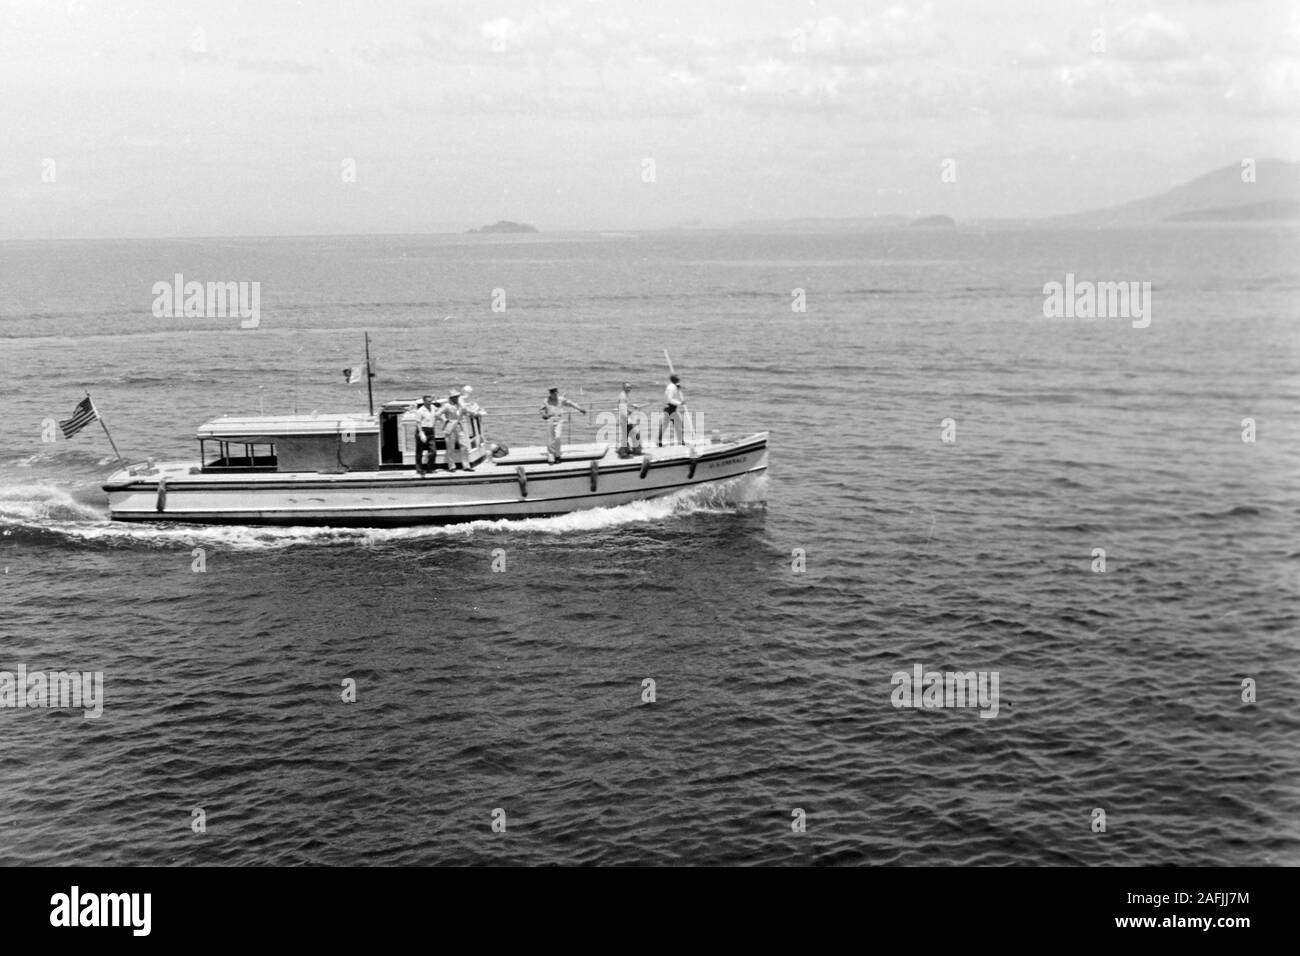 Lotsenboot auf dem Weg zum Einsatz vor dem Panamakanal, Panama 1955. Pilot cutter on its way to work near the Panama Canal, Panama 1955. Stock Photo